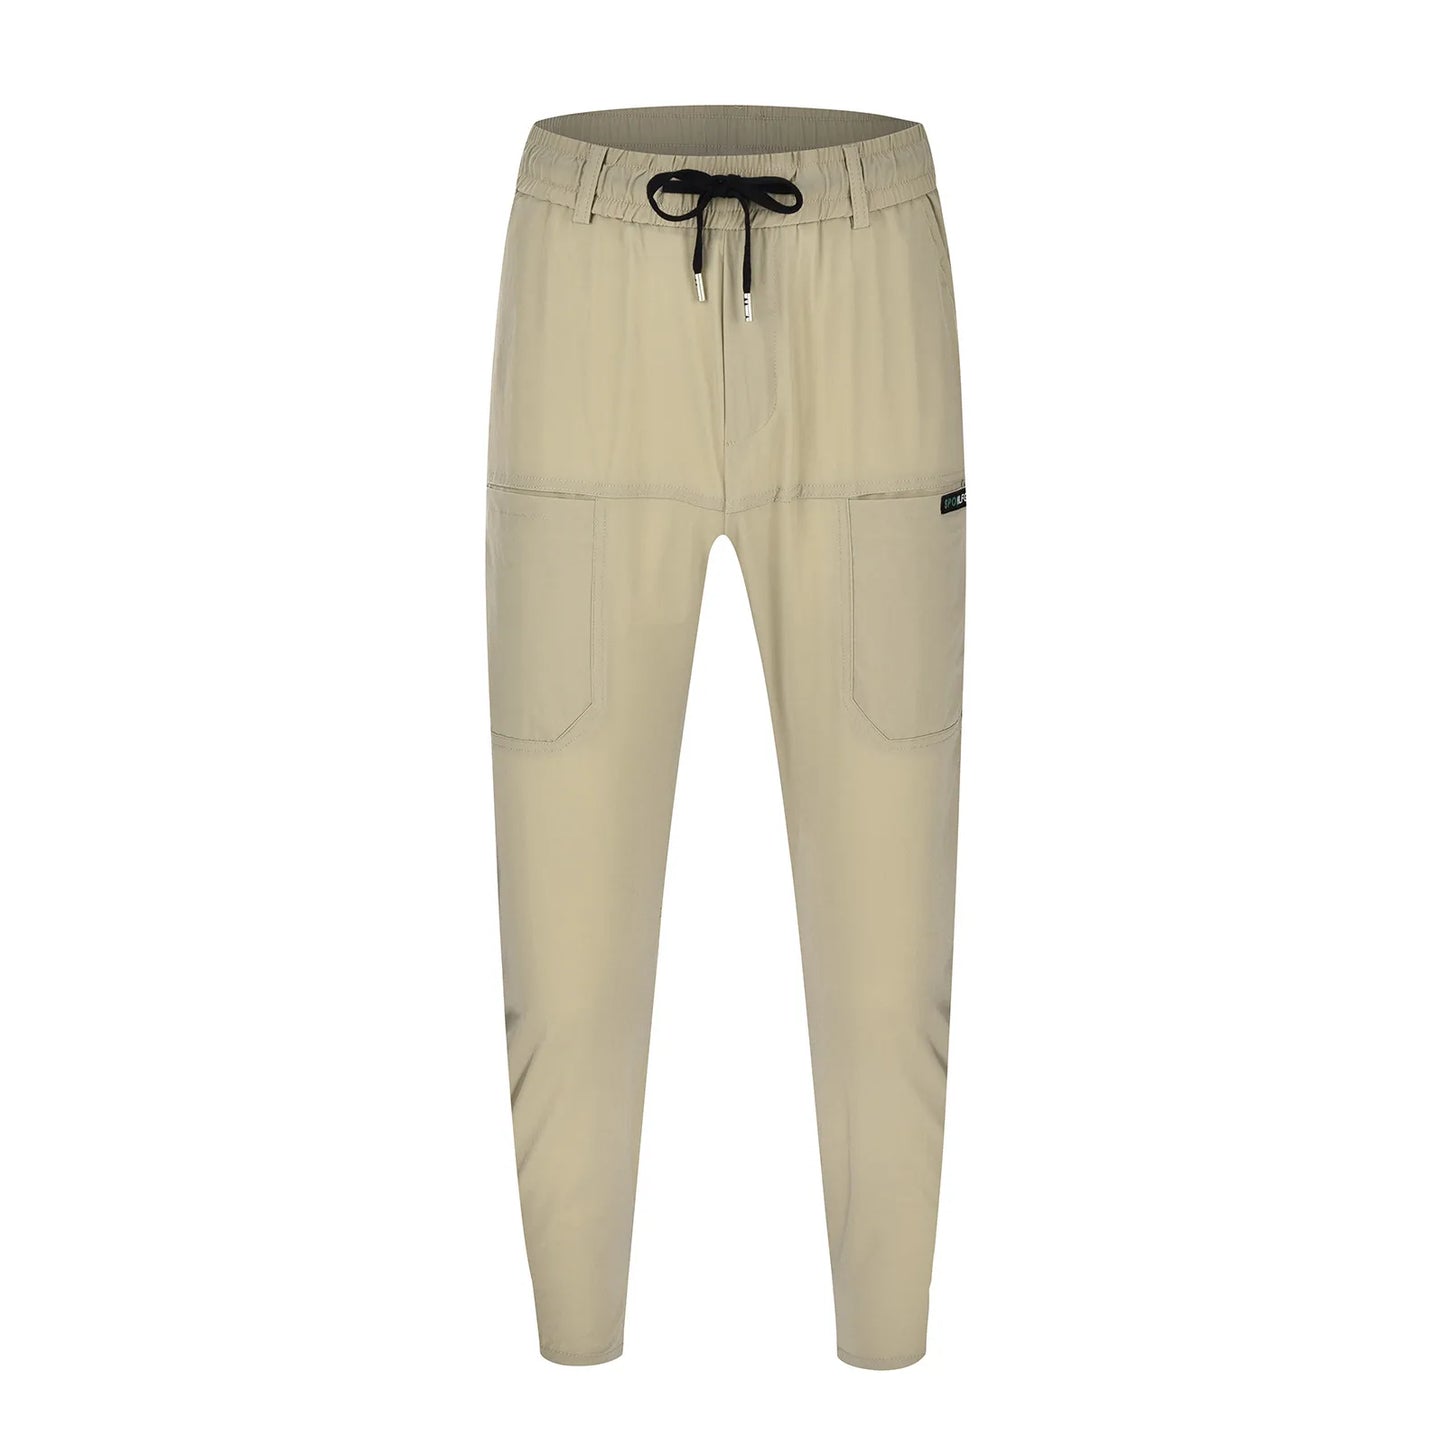 Mens Long Pant Trousers Fashion Joggers Sports Pants Summer/Casual Cargo Pants Gym Sweatpants Cargo Pants